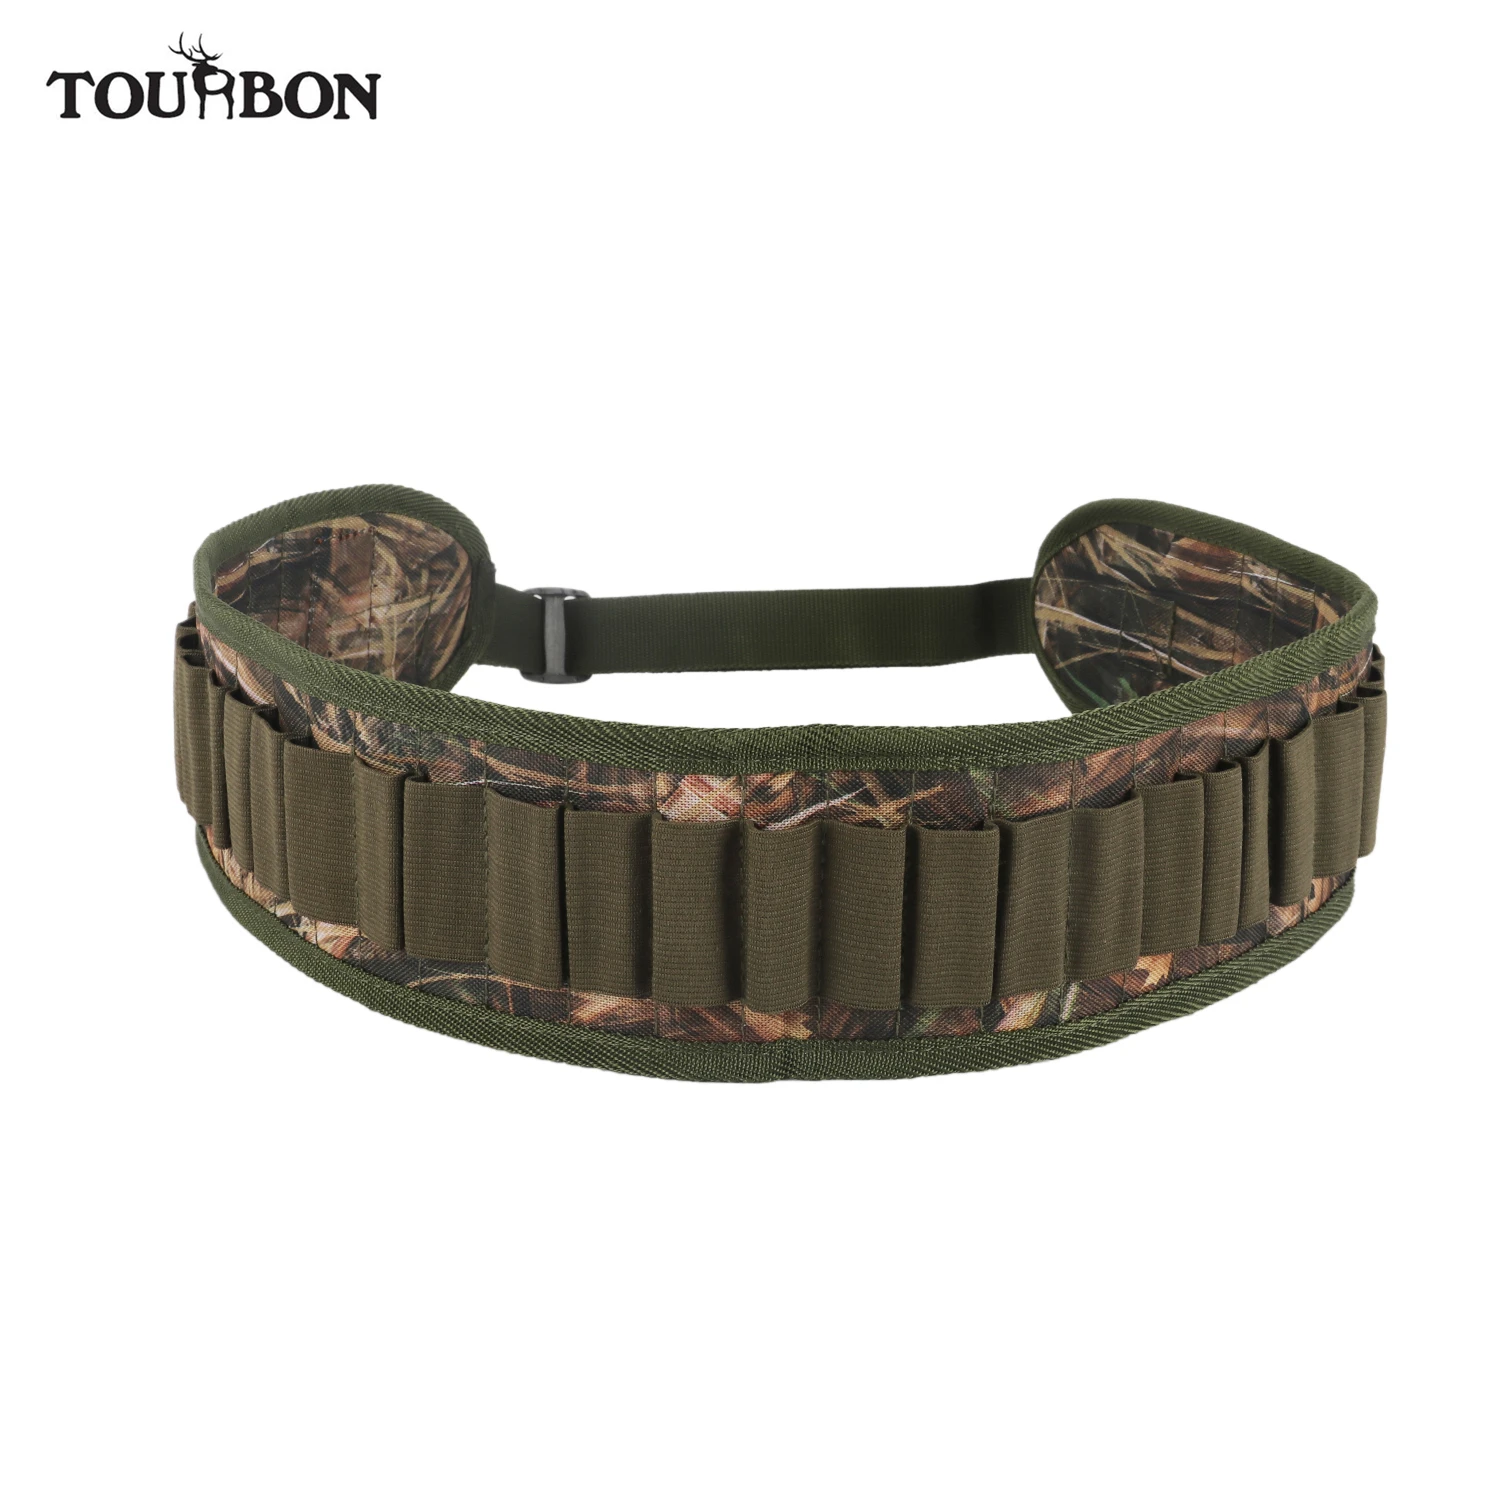 Tourbon Tactical Hunting Shotgun 12/16/20 Gauge Ammo Shells Belt Cartridge Holder 30 Rounds Bandolier Camo Nylon Gun Accessories